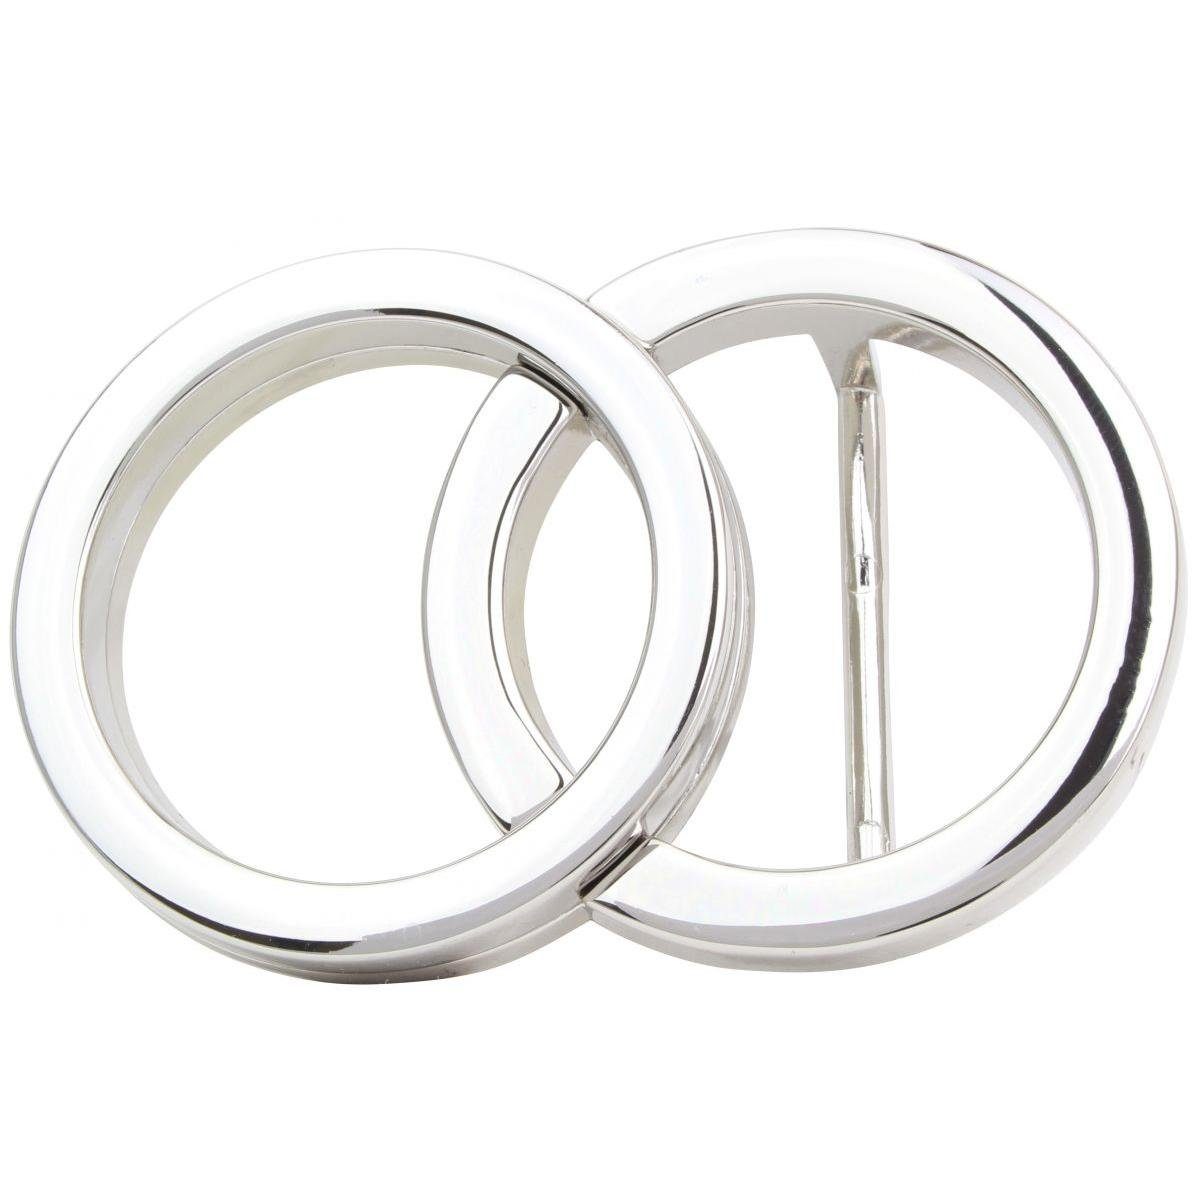 BELTINGER Gürtelschnalle Rings 4,0 cm - Buckle Wechselschließe Gürtelschließe 40mm - Gürtel bis Silber glänzend